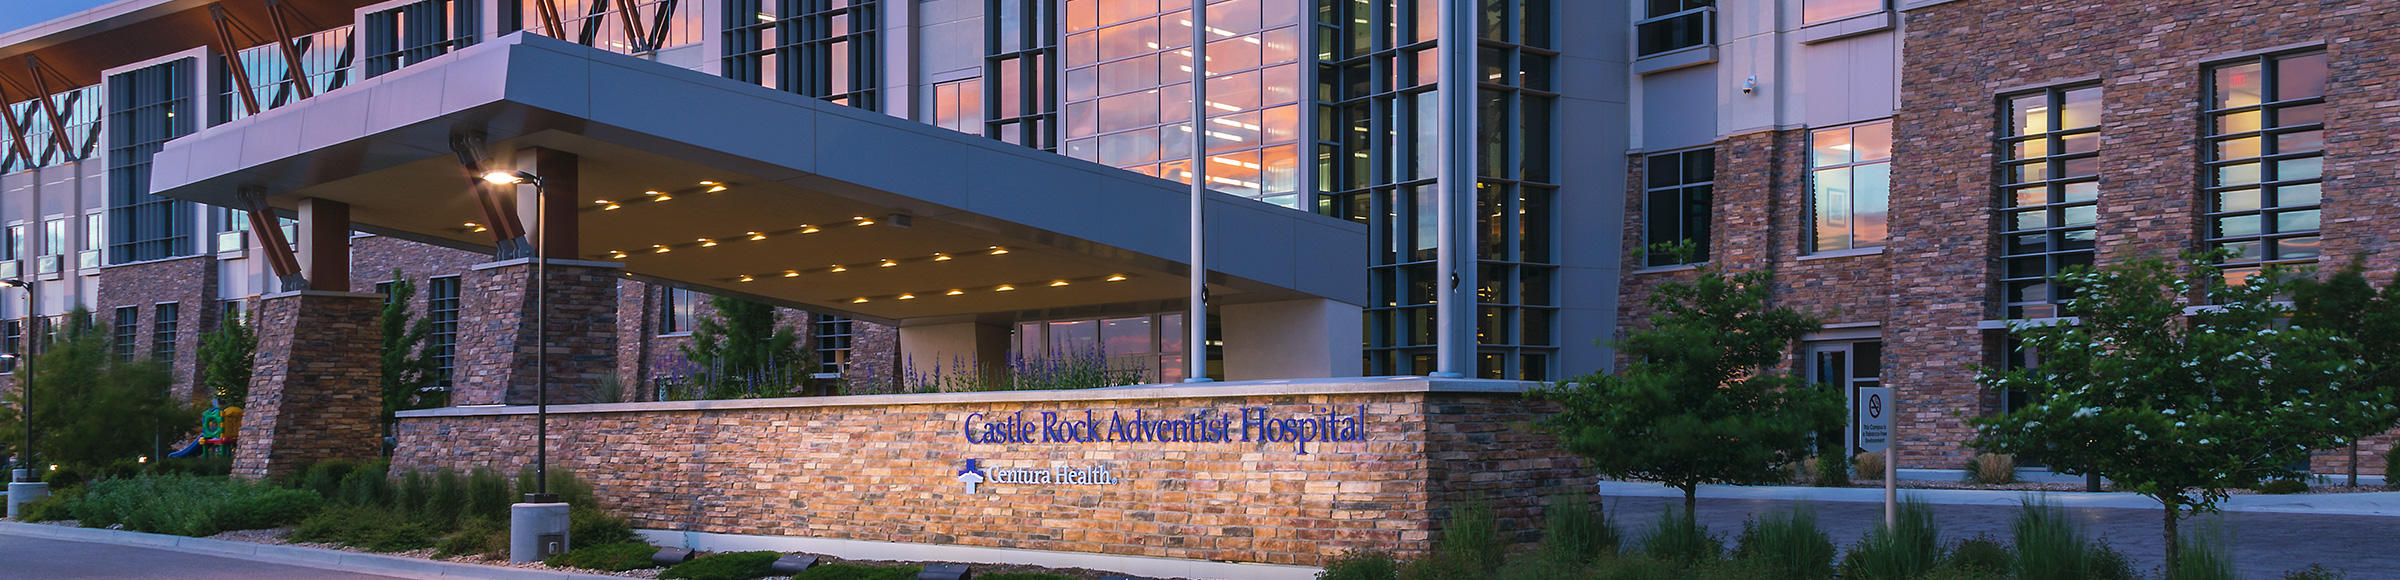 Castle Rock Adventist Hospital Photo